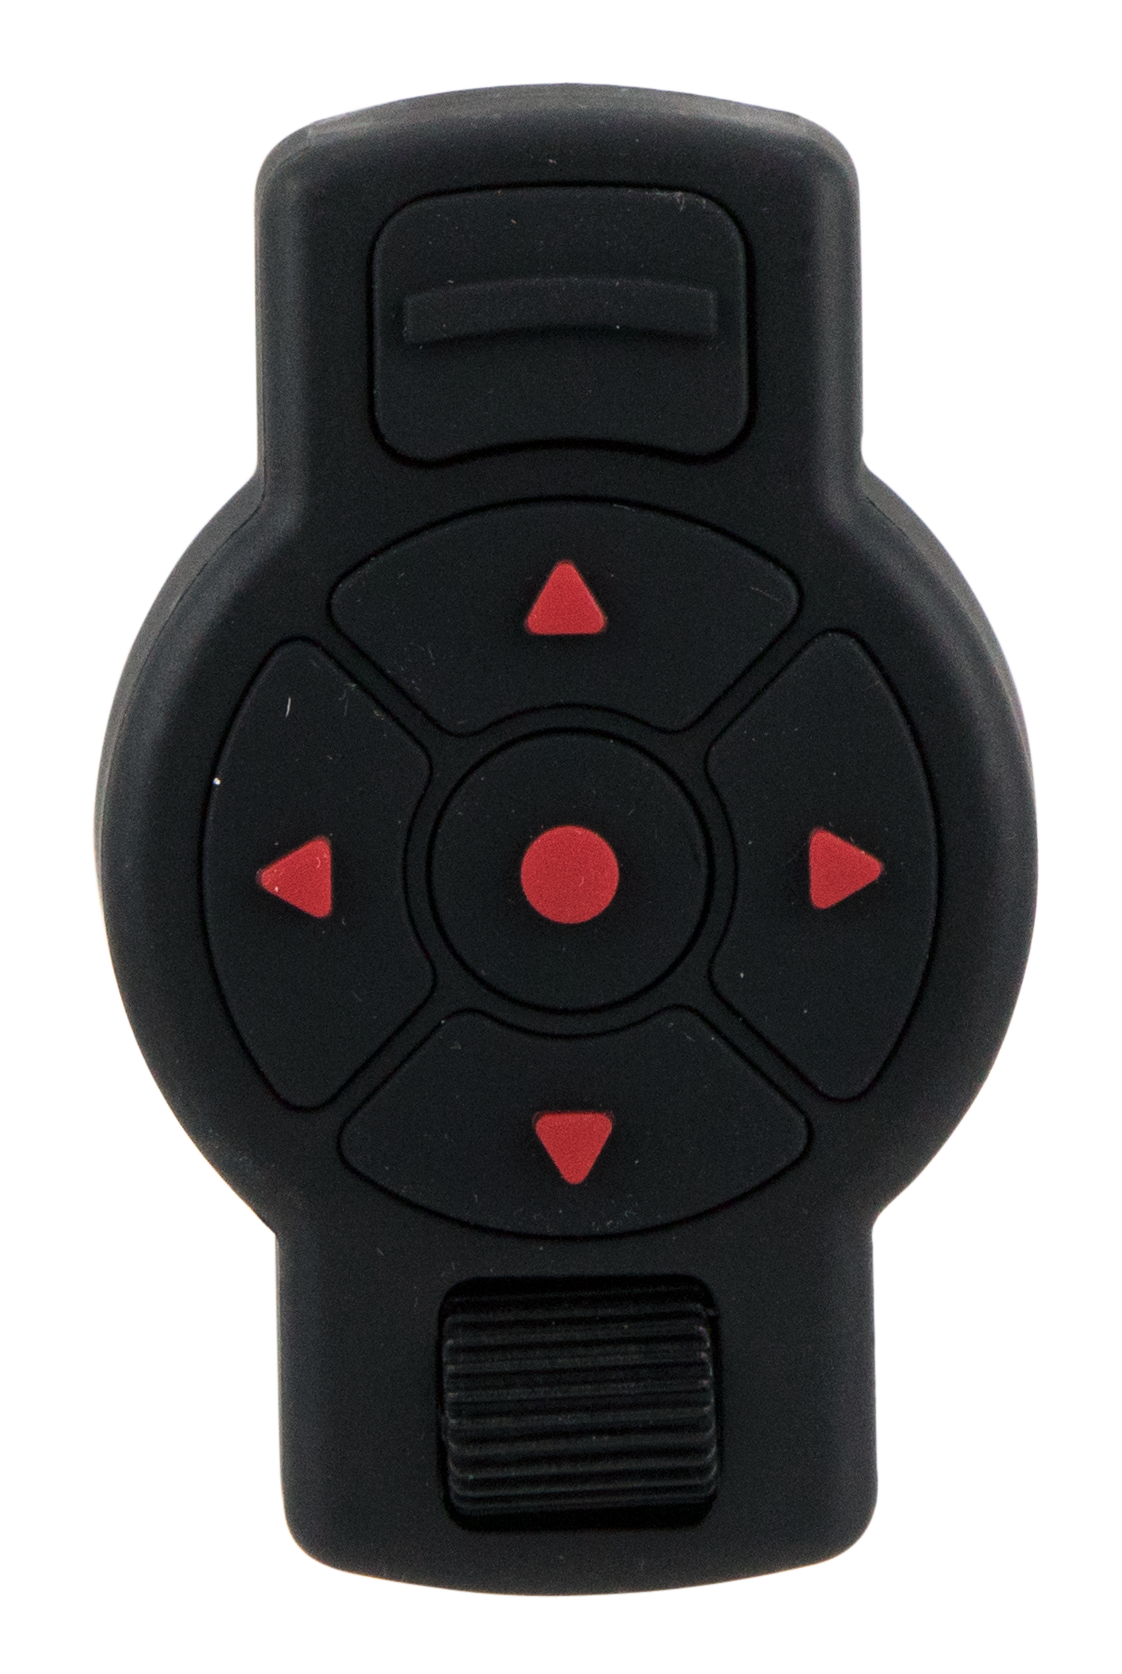 ATN ACMURCNTRL1 X-Trac Tactical Remote Control Bluetooth Black